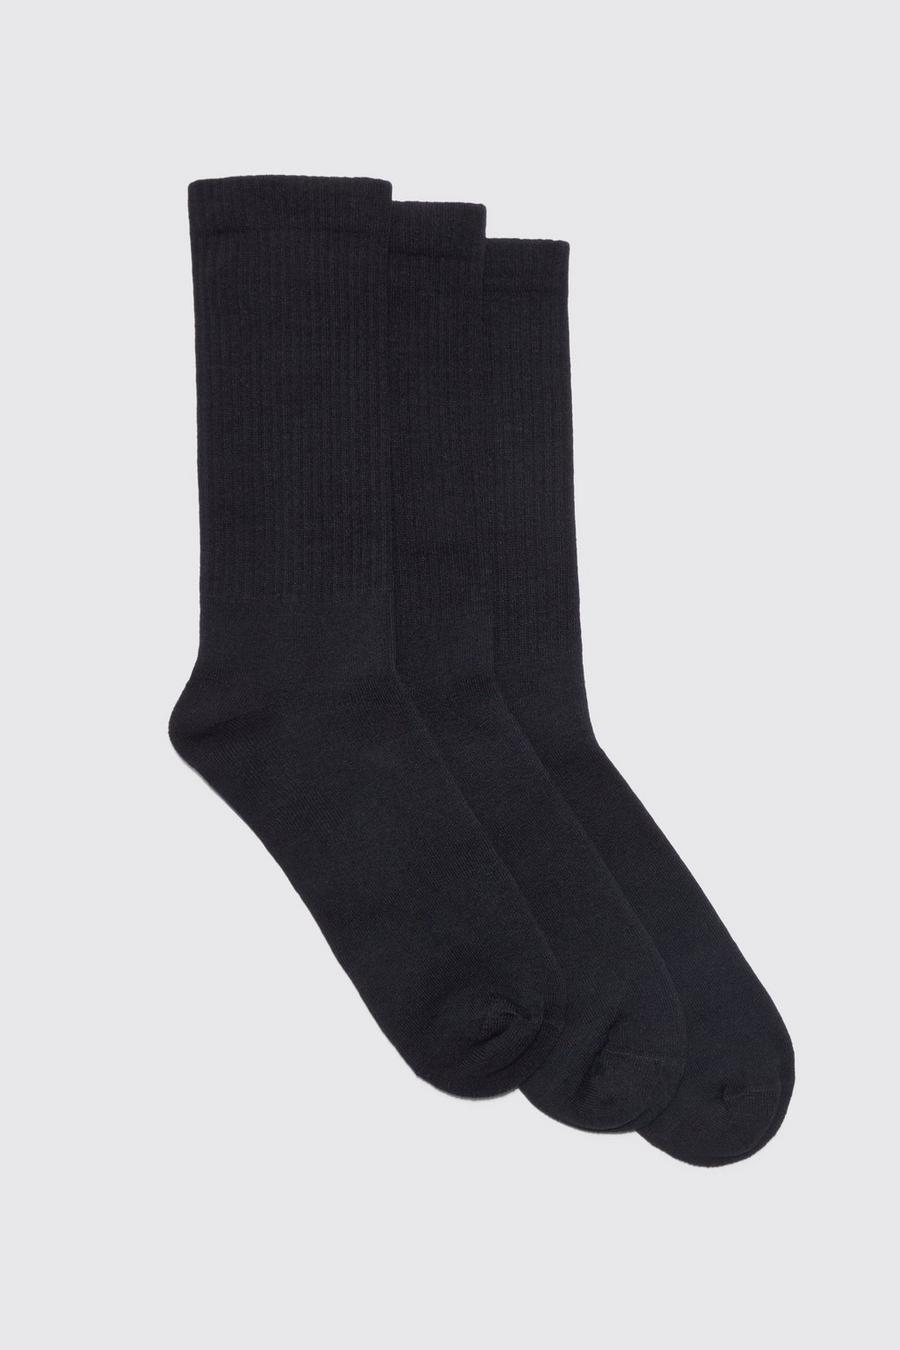 Pack de 3 pares de calcetines deportivos lisos, Black negro